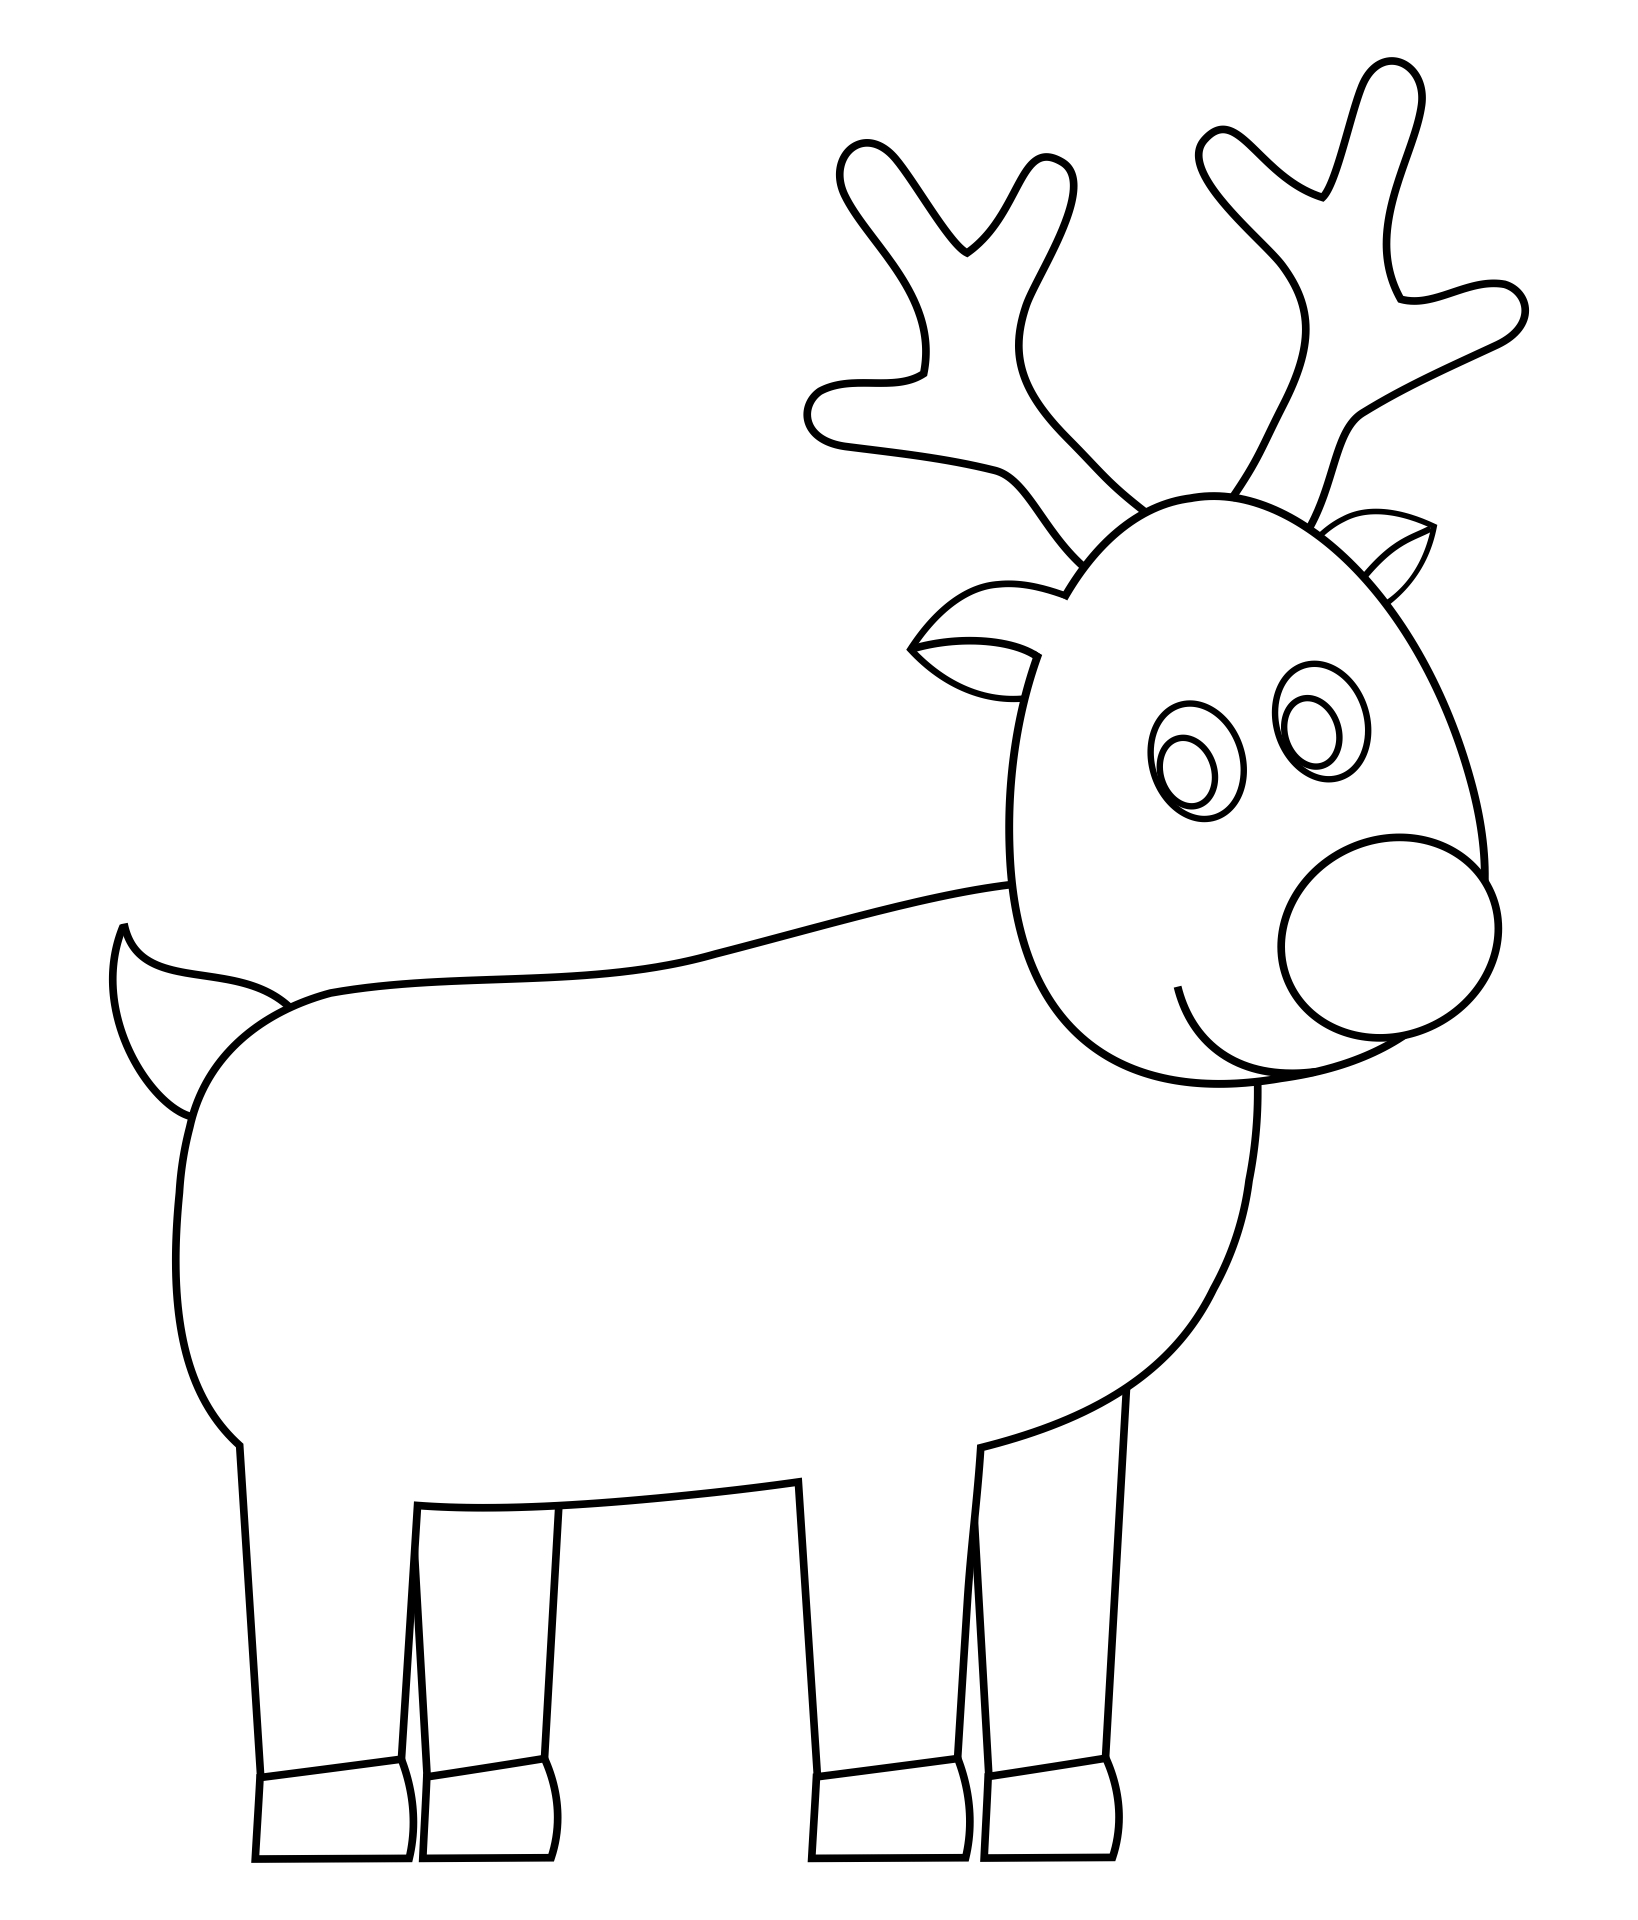 9-best-images-of-reindeer-free-printable-faces-free-printable-reindeer-crafts-rudolph